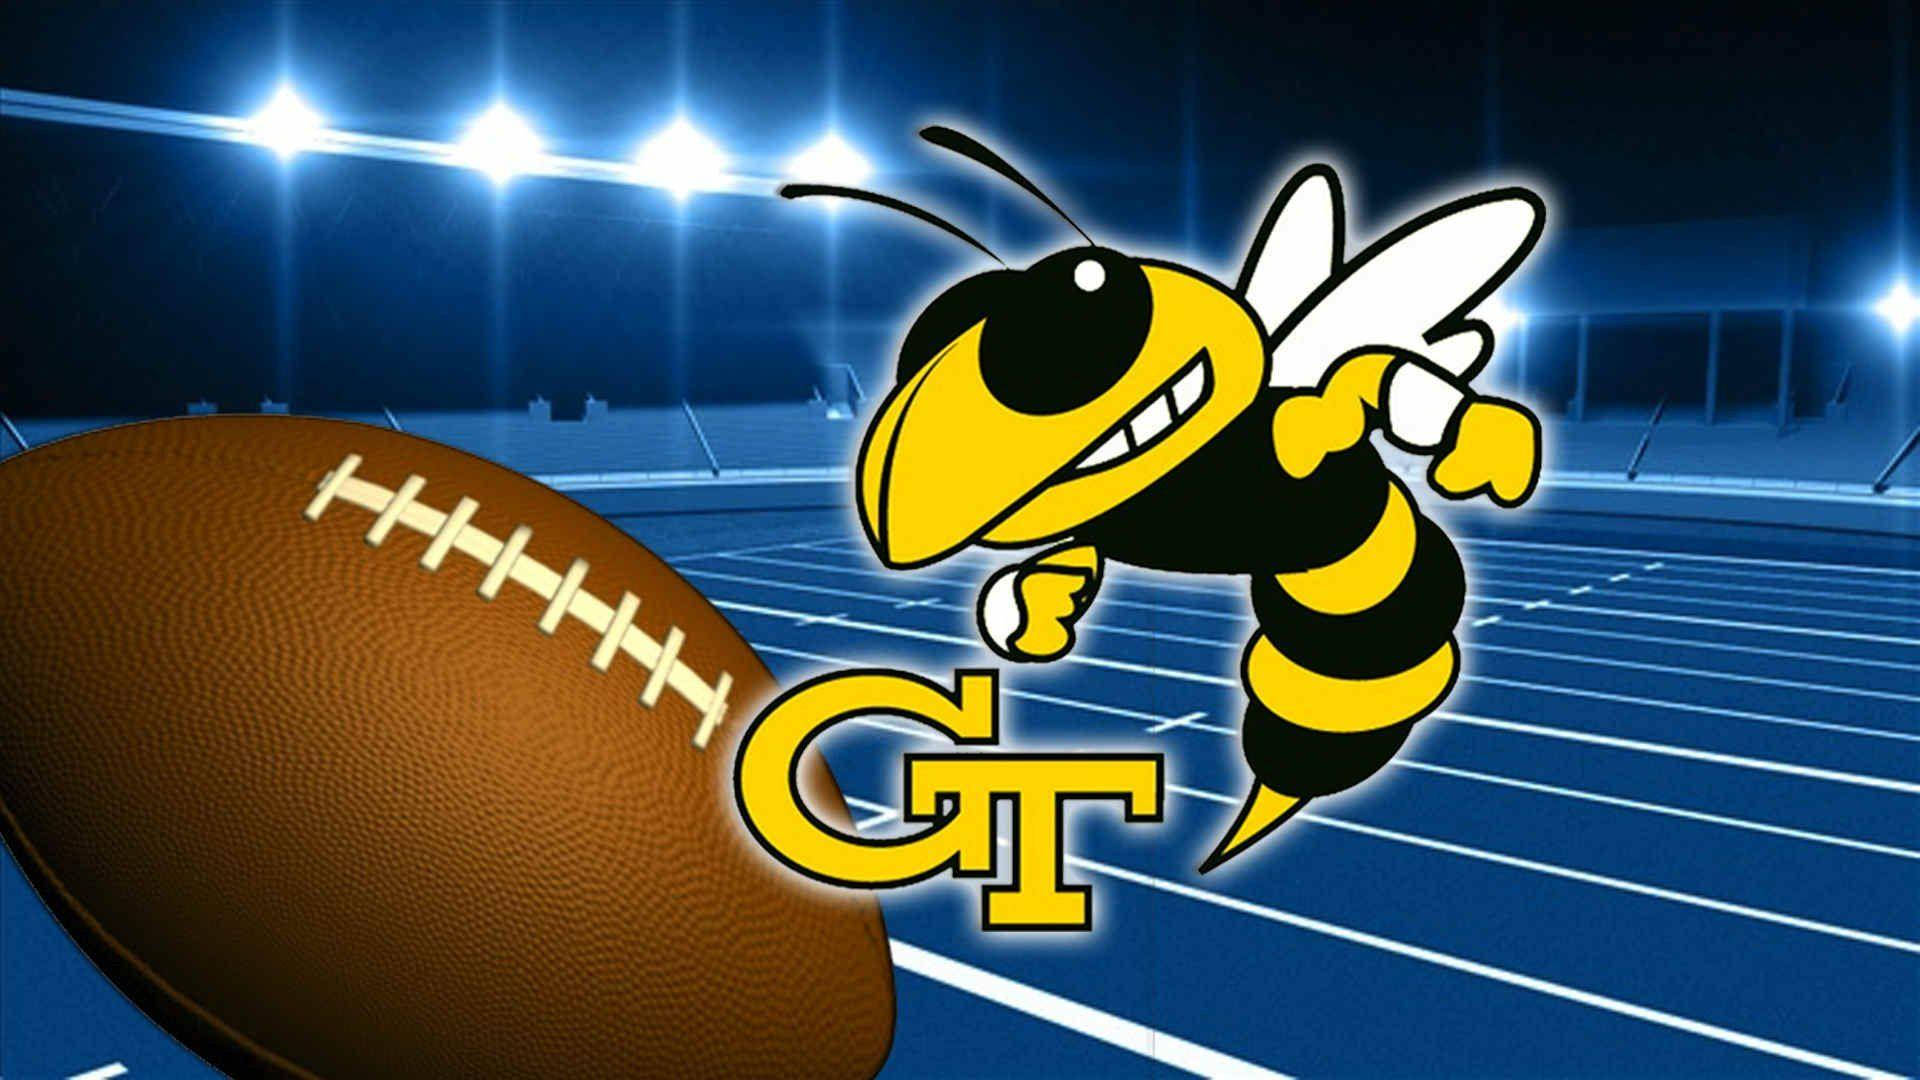 Georgia Tech Football And Bee Wallpaper